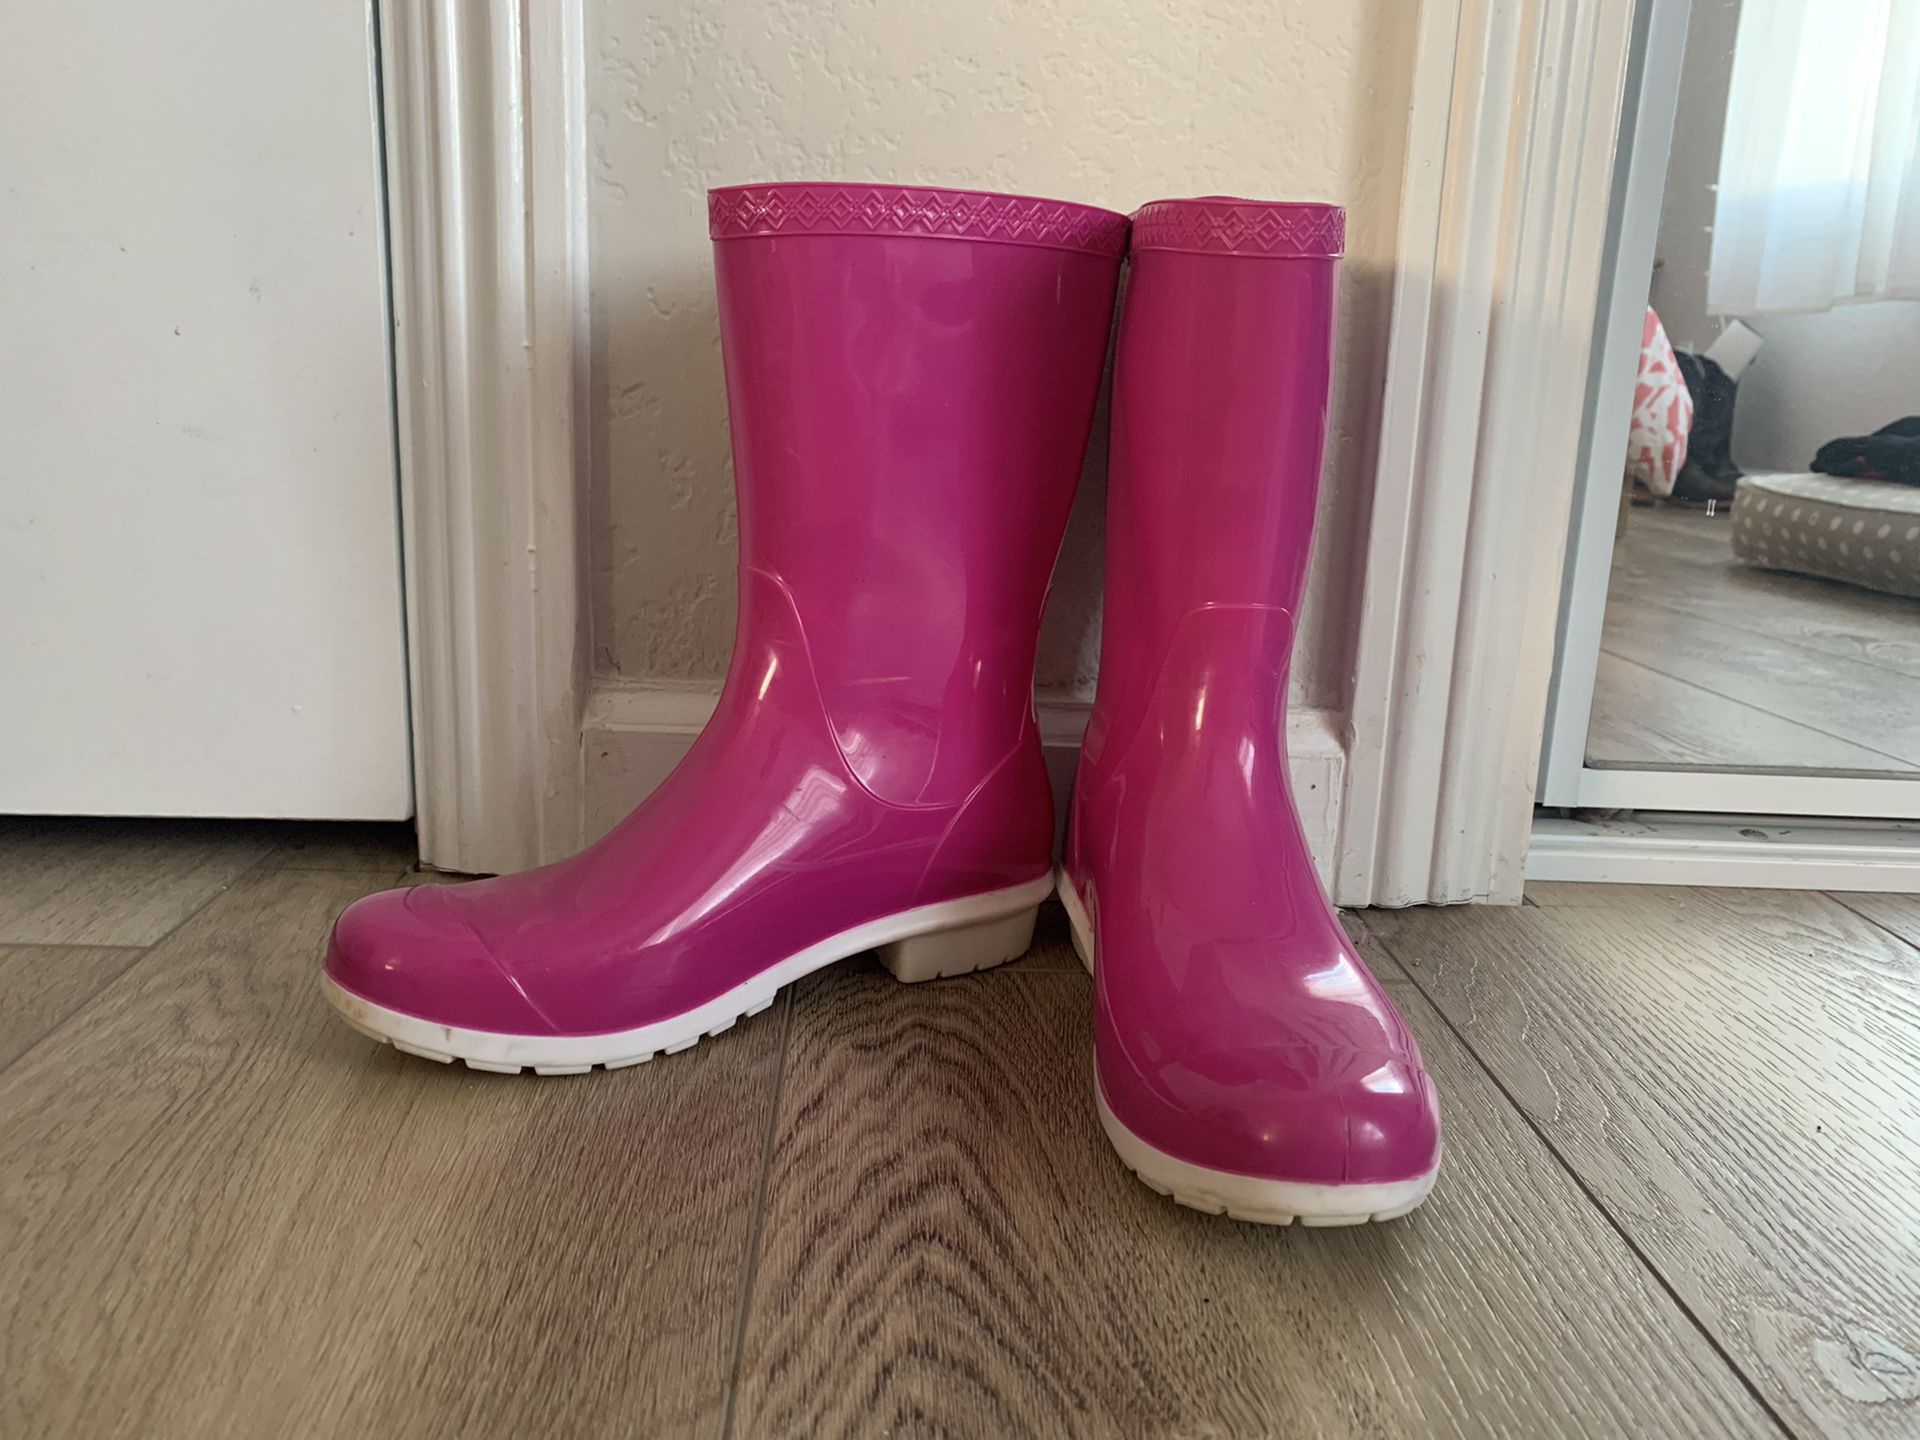 UGGs rain boots